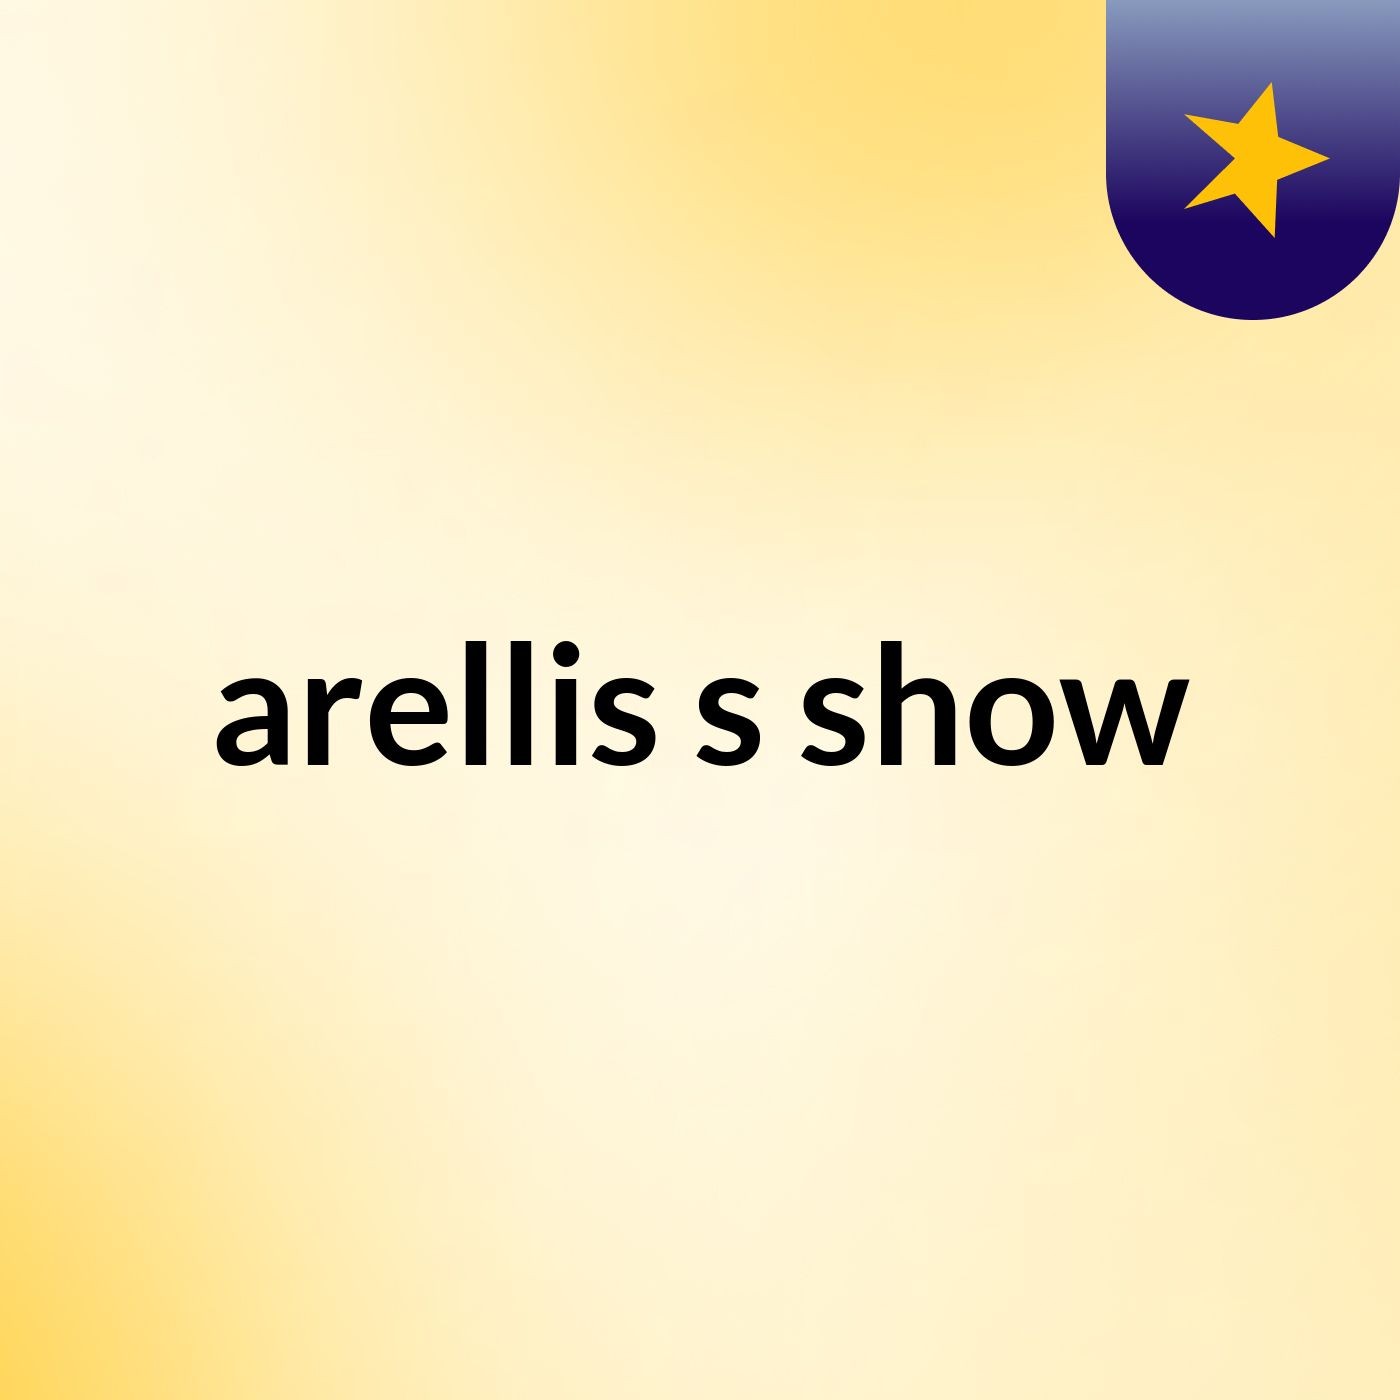 arellis's show